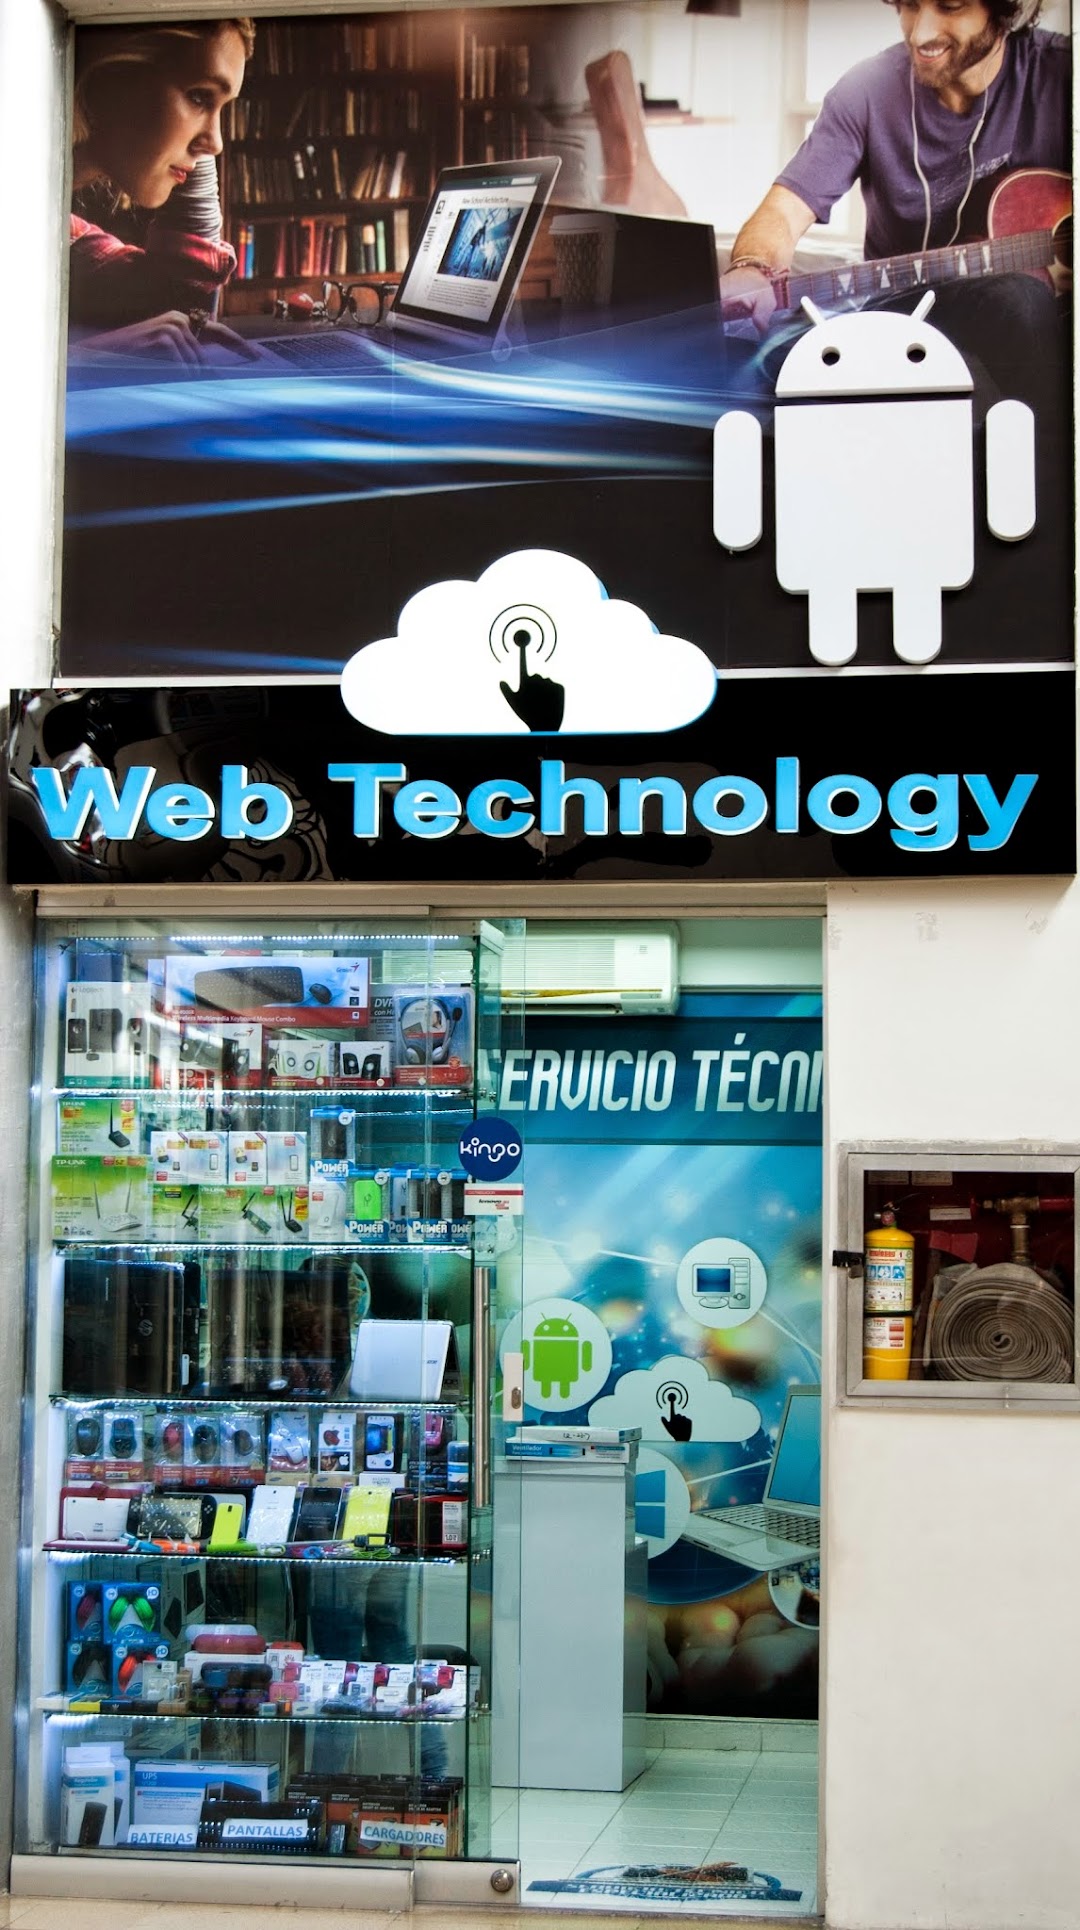 Web Technology Colombia L 276